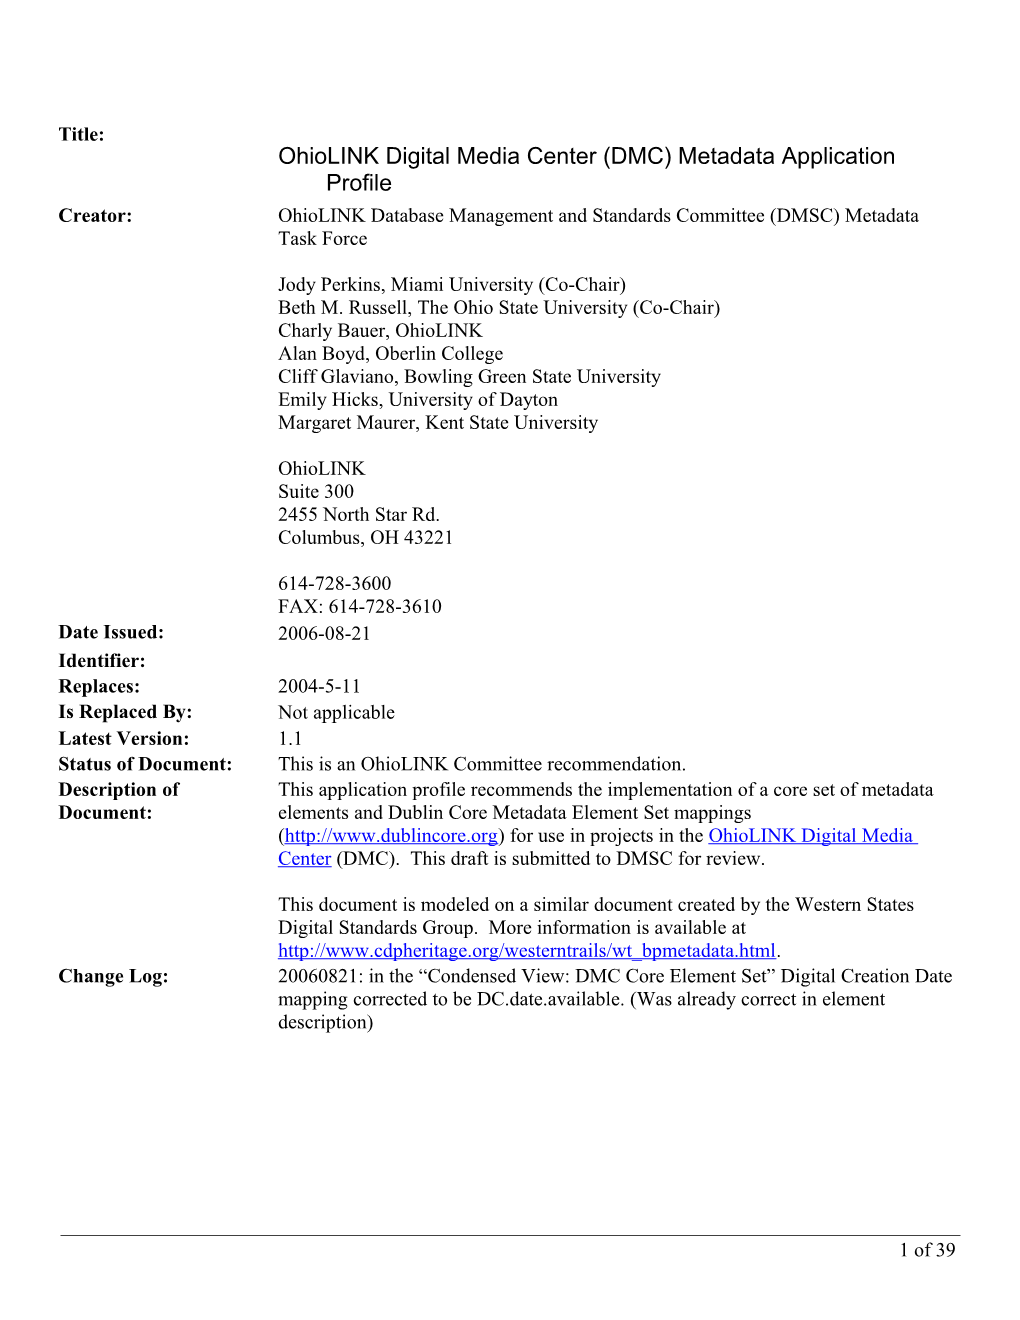 Ohiolinkdigitalmediacenter (DMC) Metadata Application Profile